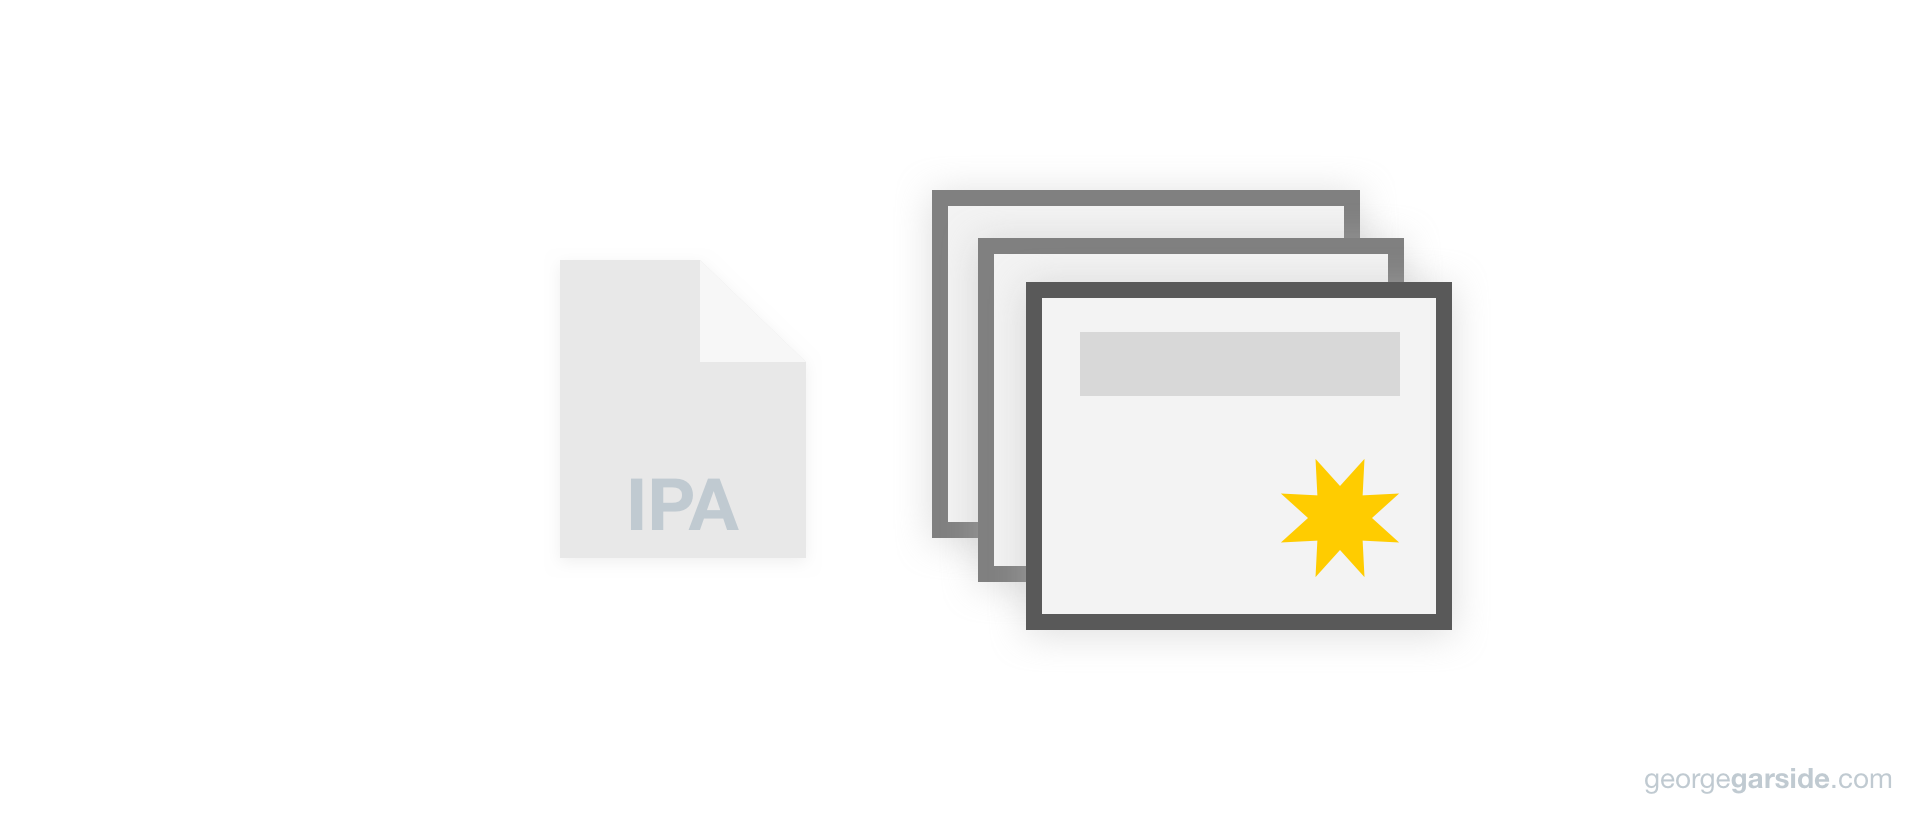 Custom app entitlements for IPA iOS app